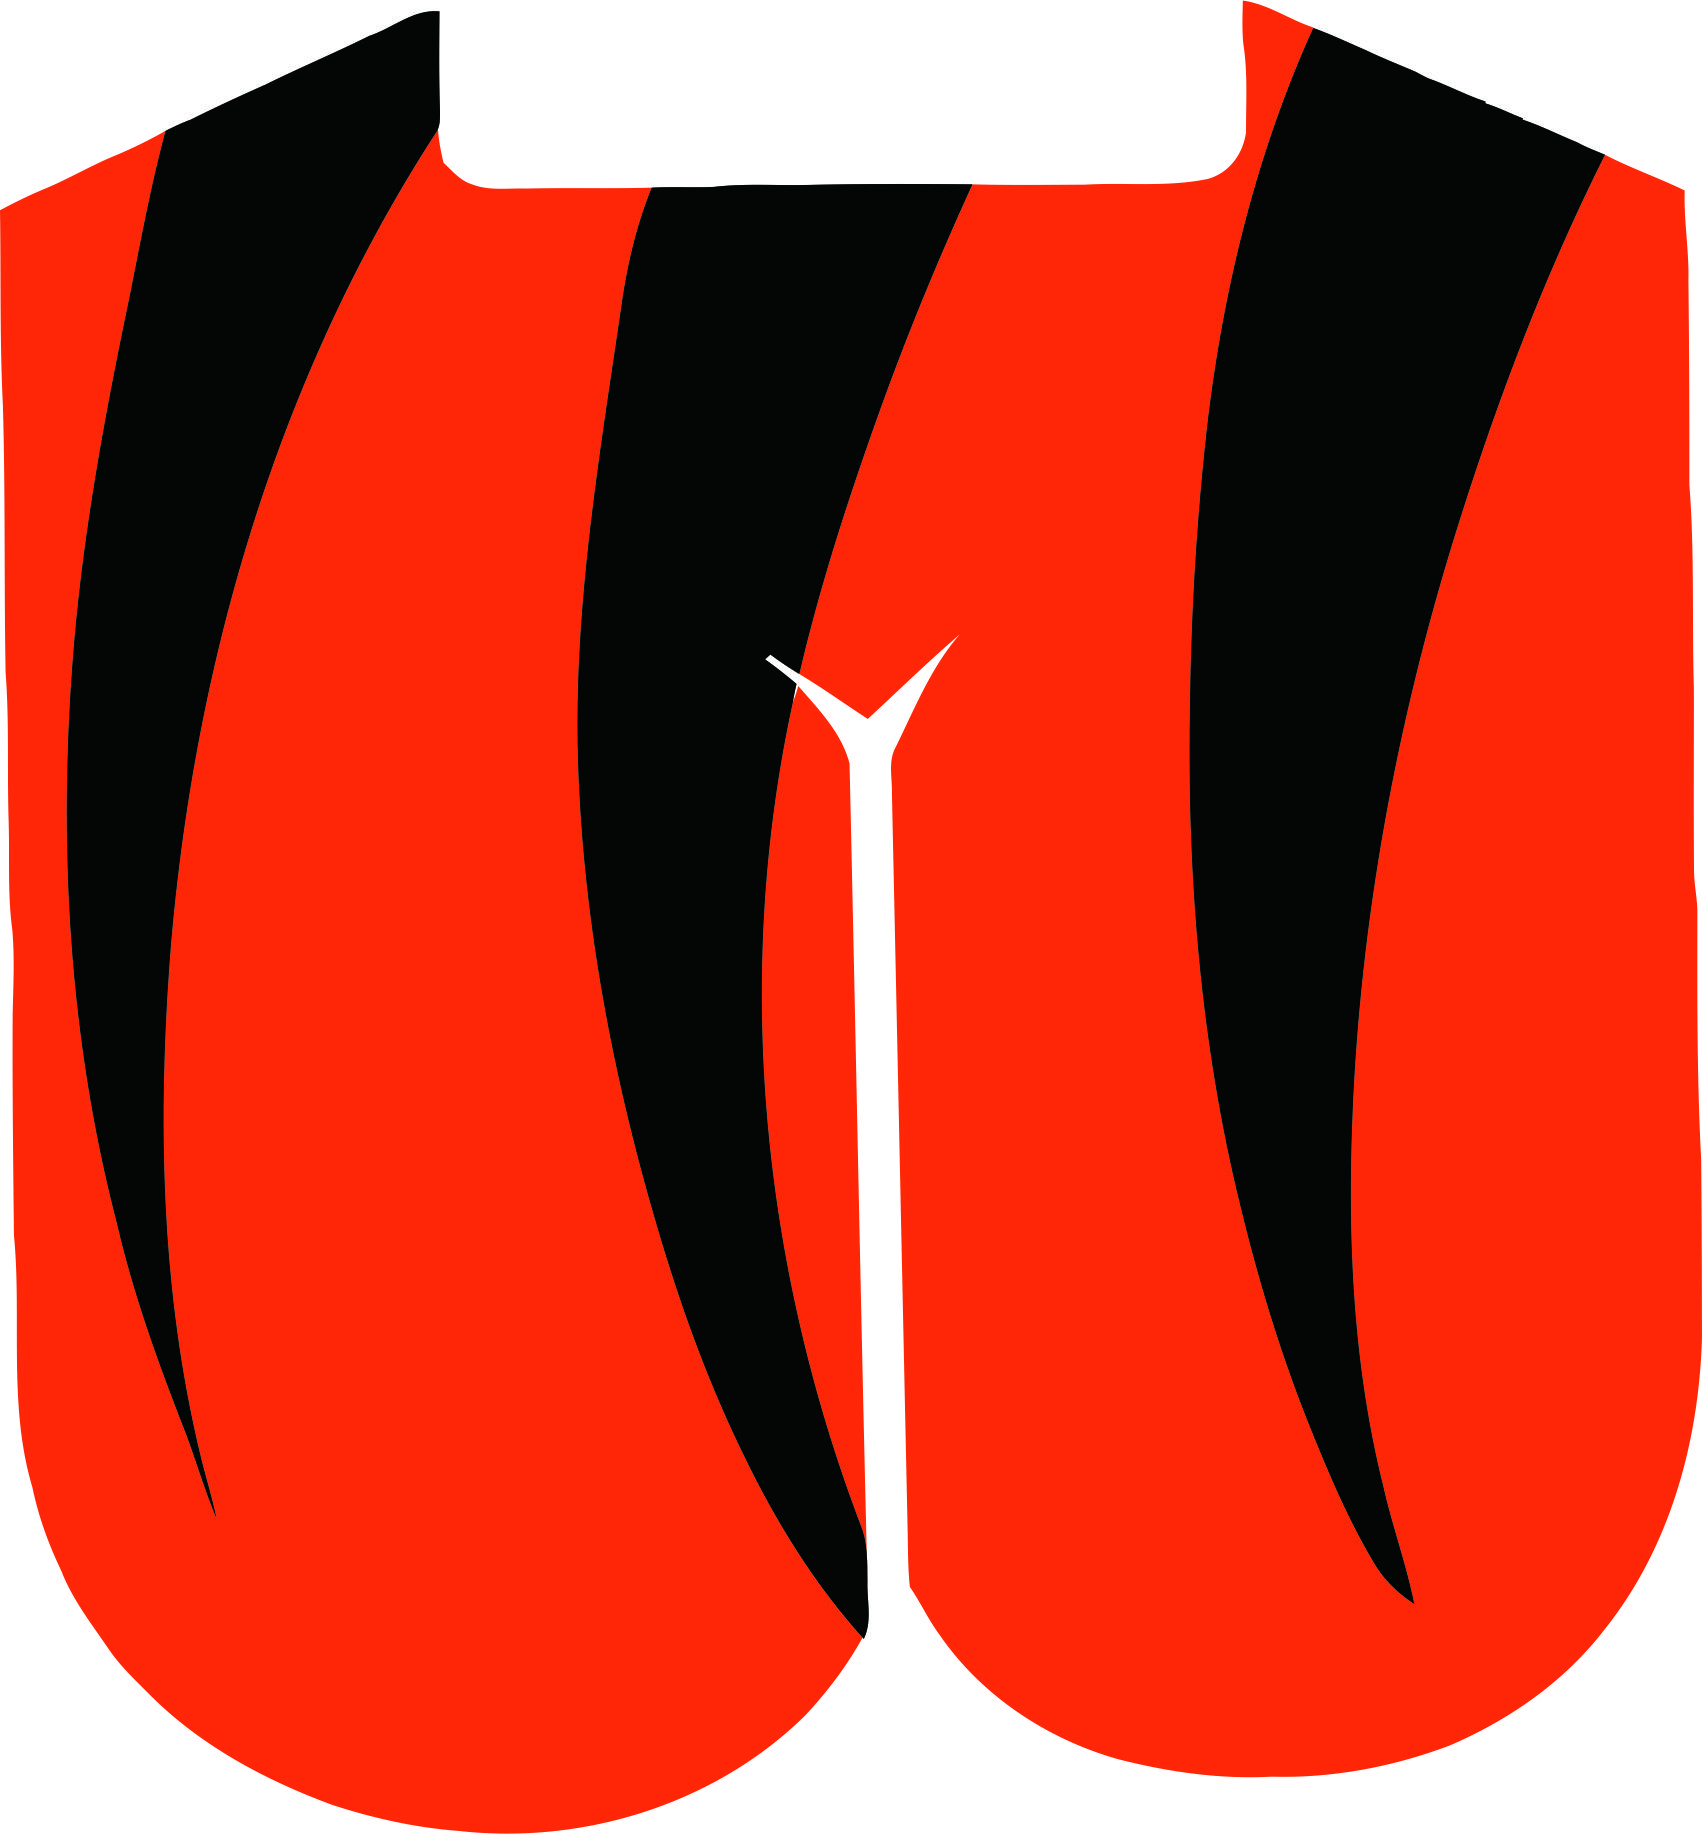 Cincinnati Bengals Butts Logo fabric transfer